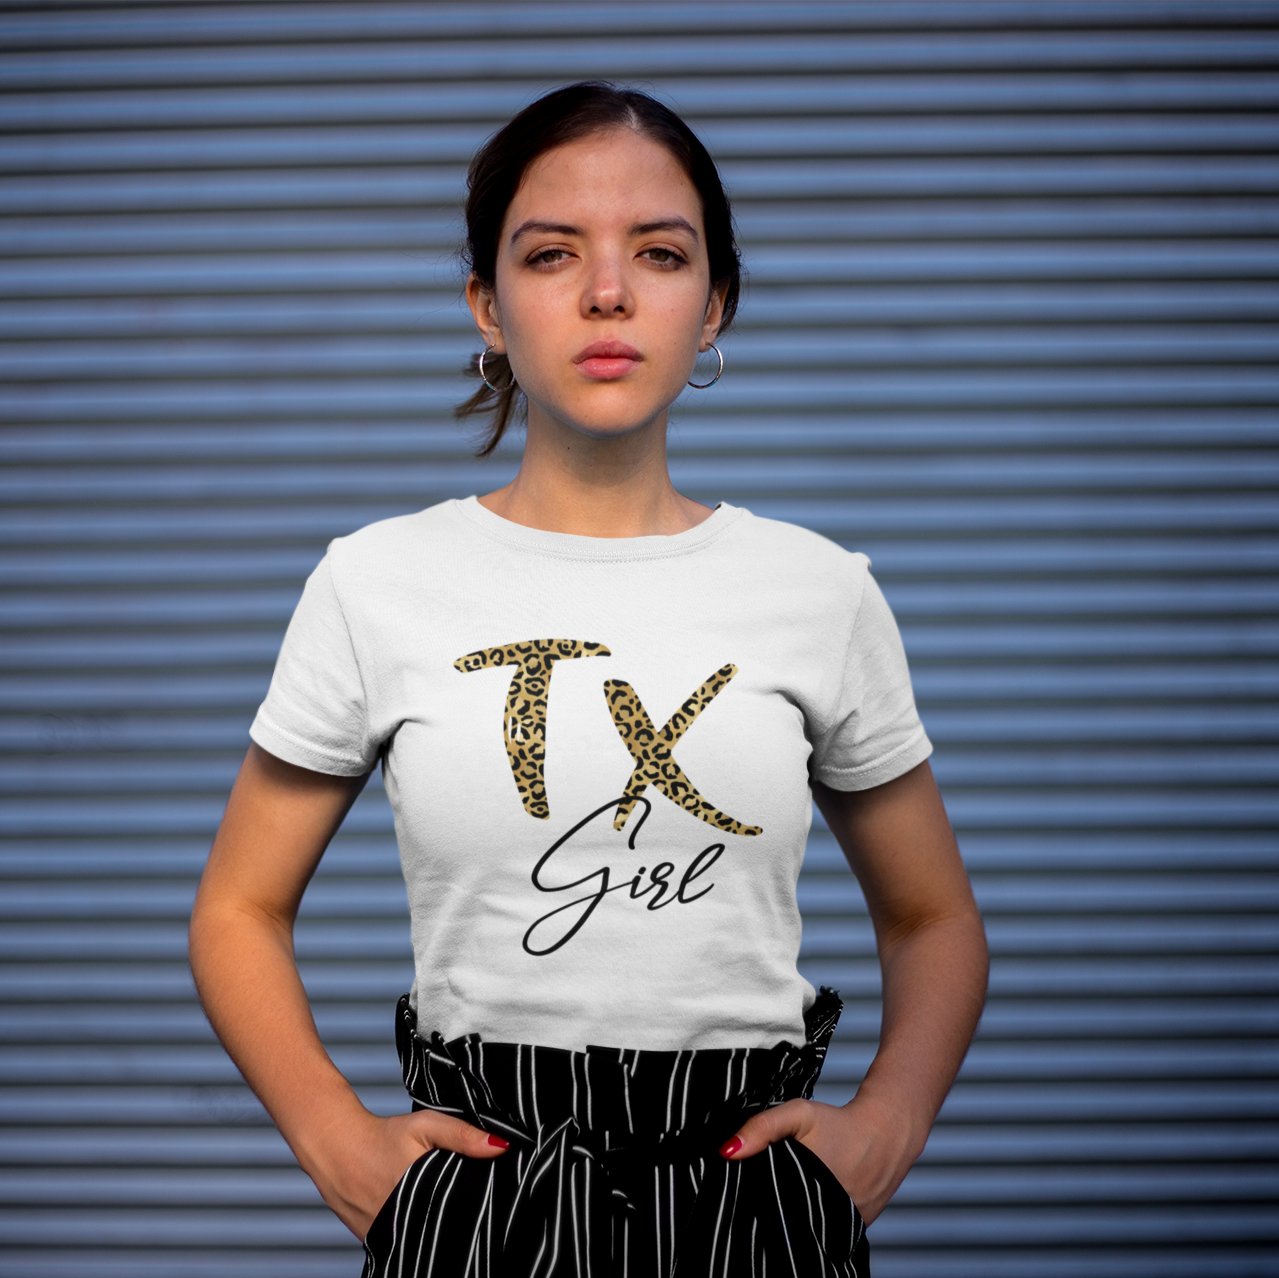 Woman wearing a TX girl t-shirt. The TX is leopard print.